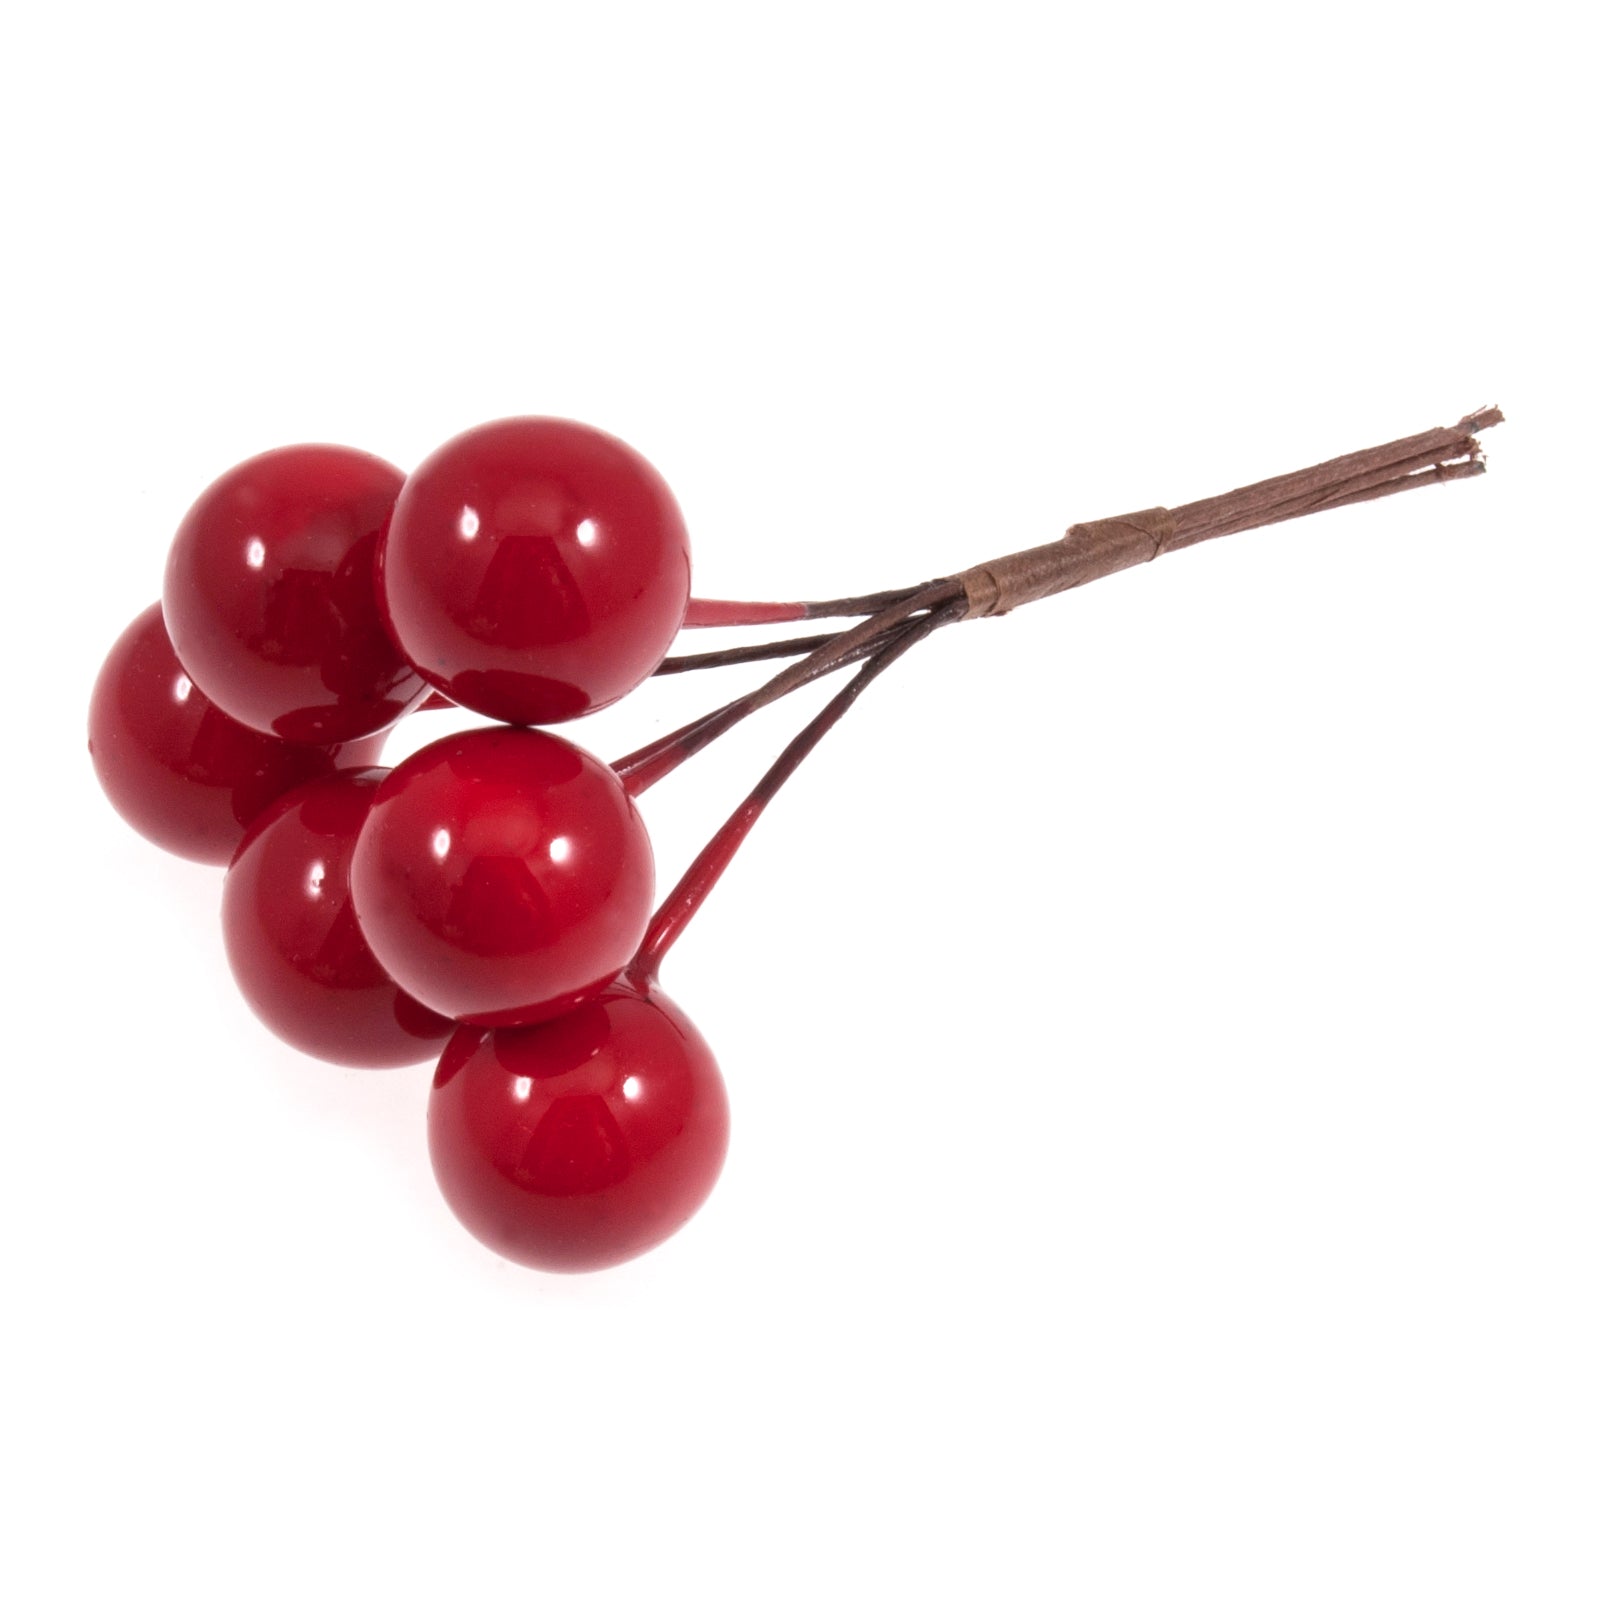 Medium 15mm Berries: 1 bunch of 6 Stems - various